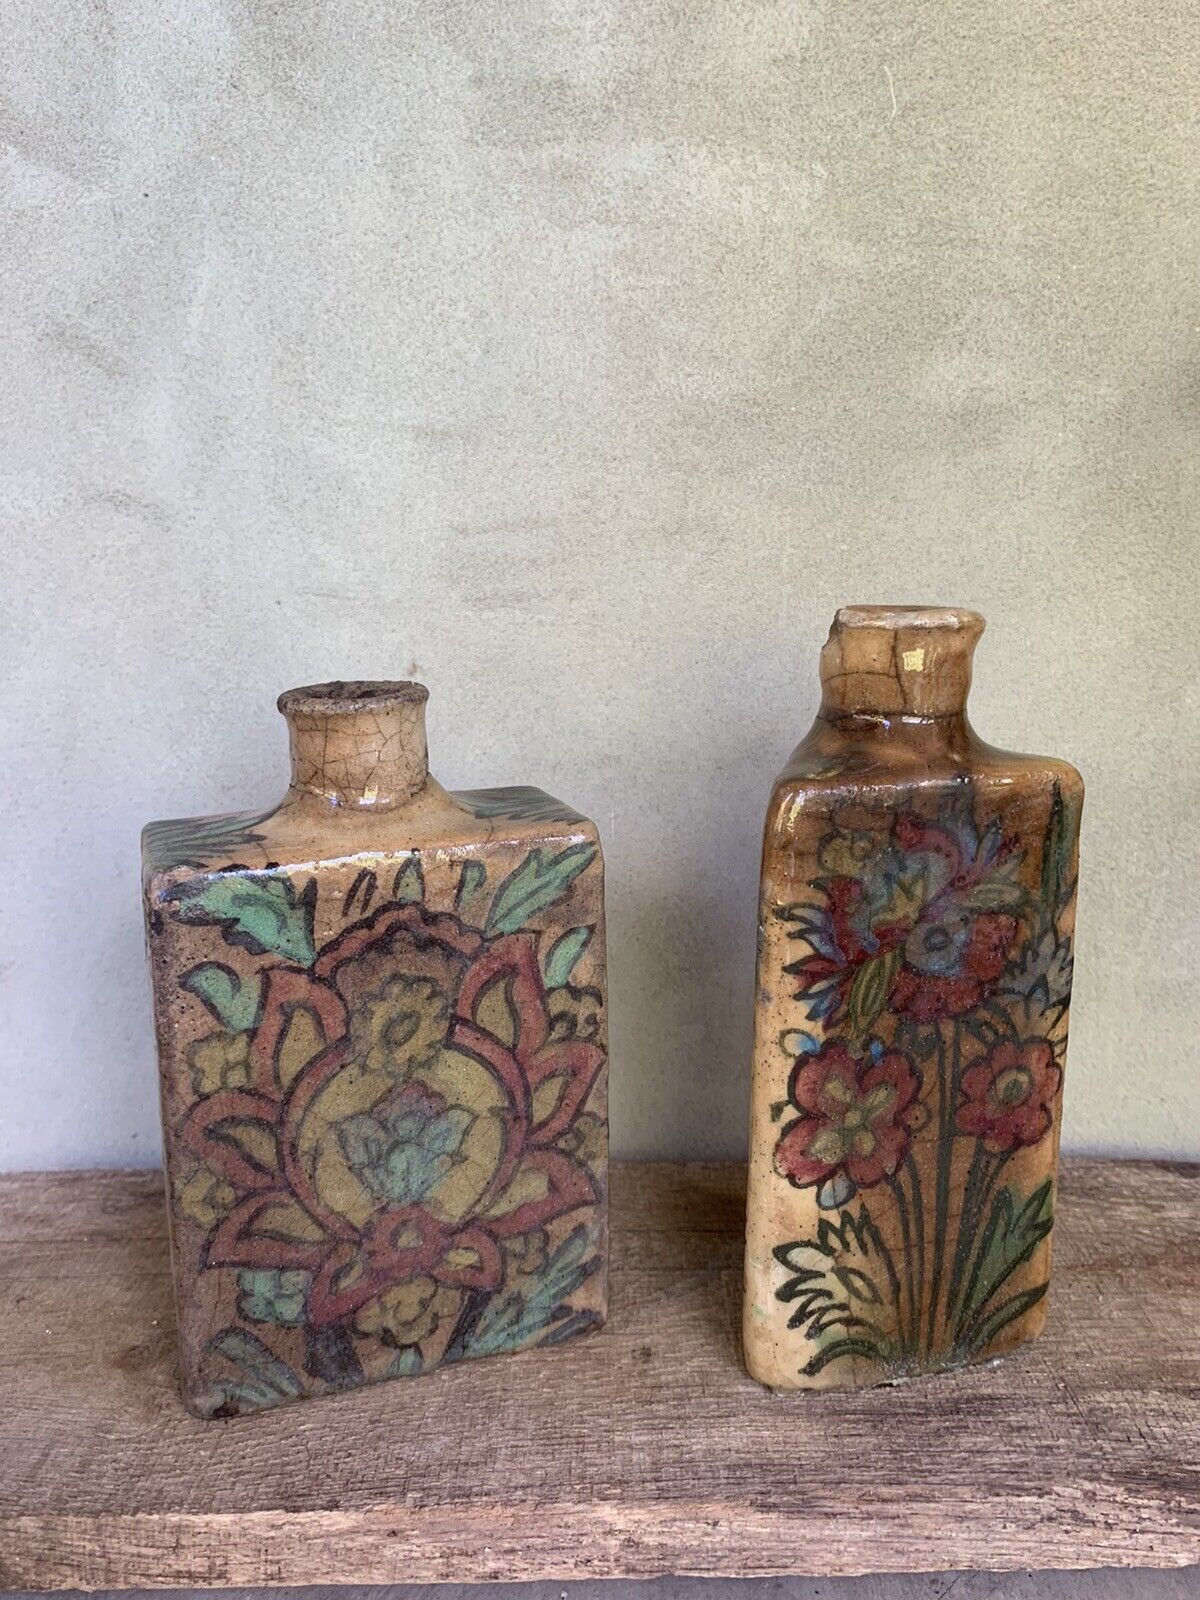 2 Antique Iznik Flask Bottles Persian/Turkey, Qajar Dynasty,19th Century Clay 